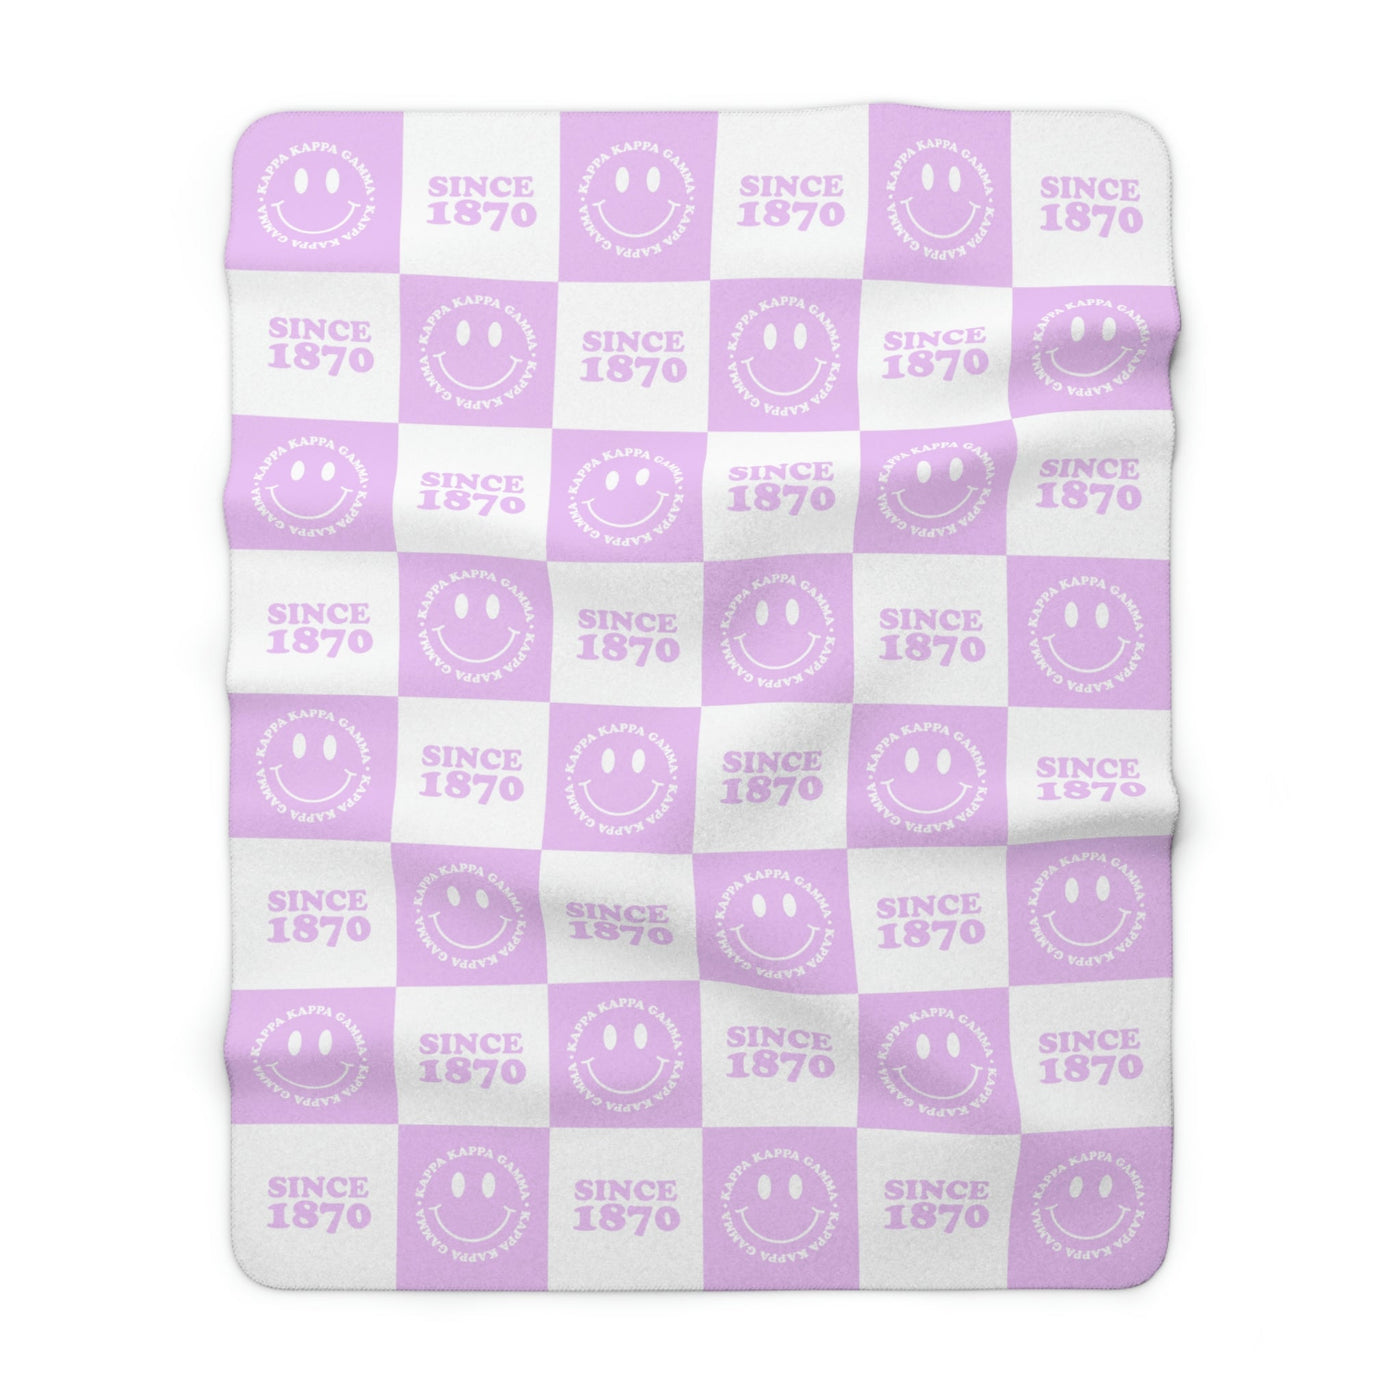 Kappa Kappa Gamma Fluffy Blanket | KKG Cozy Sherpa Sorority Blanket